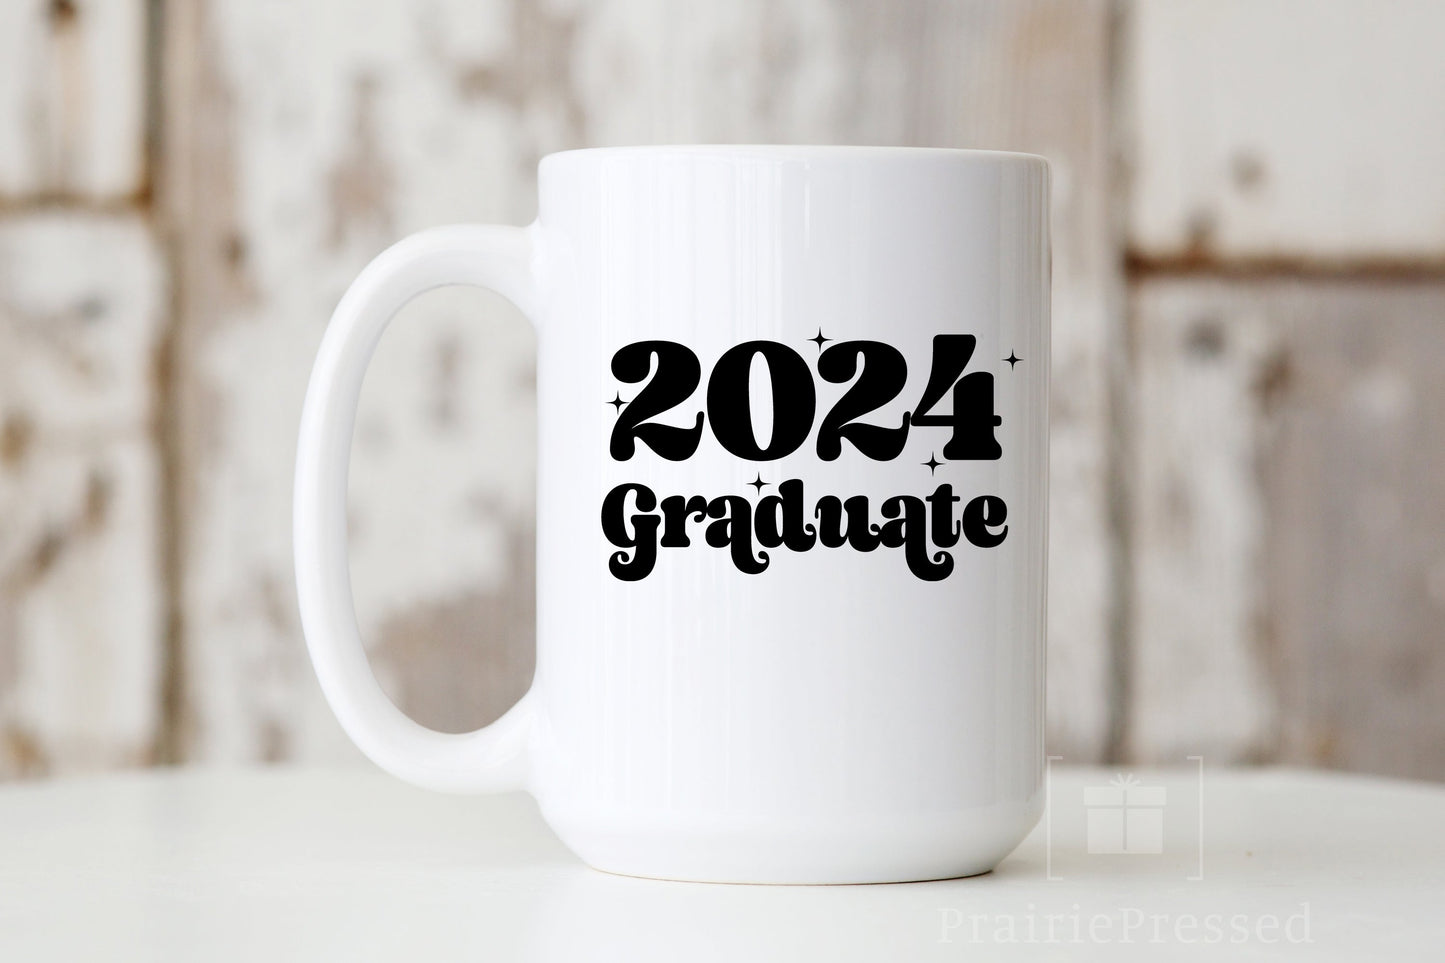 Graduation Ceramic Mug - She Believed She Could